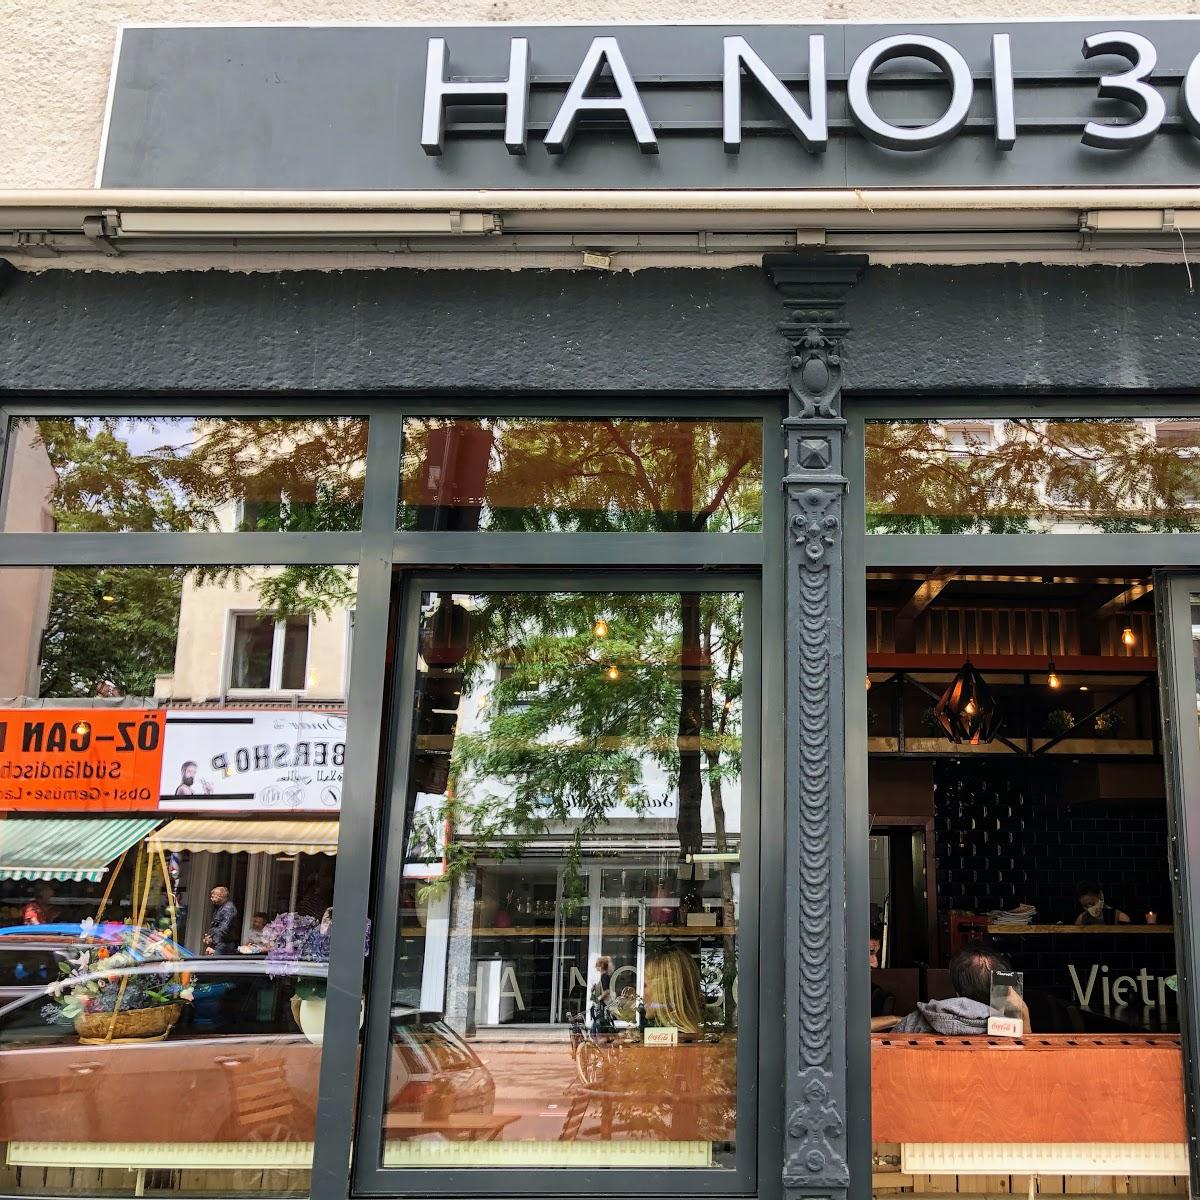 Restaurant "Hanoi 36" in Köln